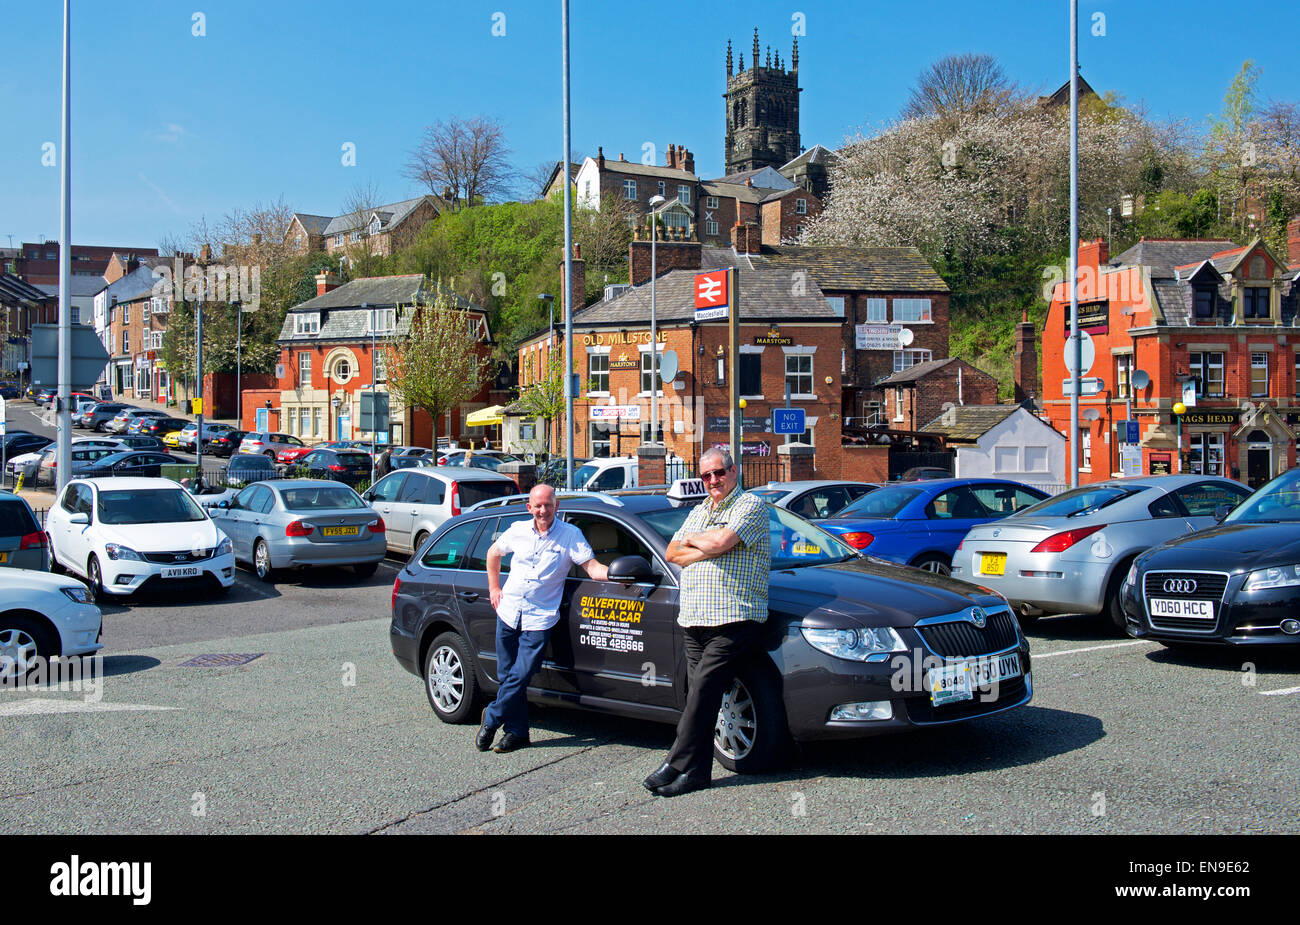 Les chauffeurs de taxis à Macclesfield, Cheshire, Angleterre, Royaume-Uni Banque D'Images